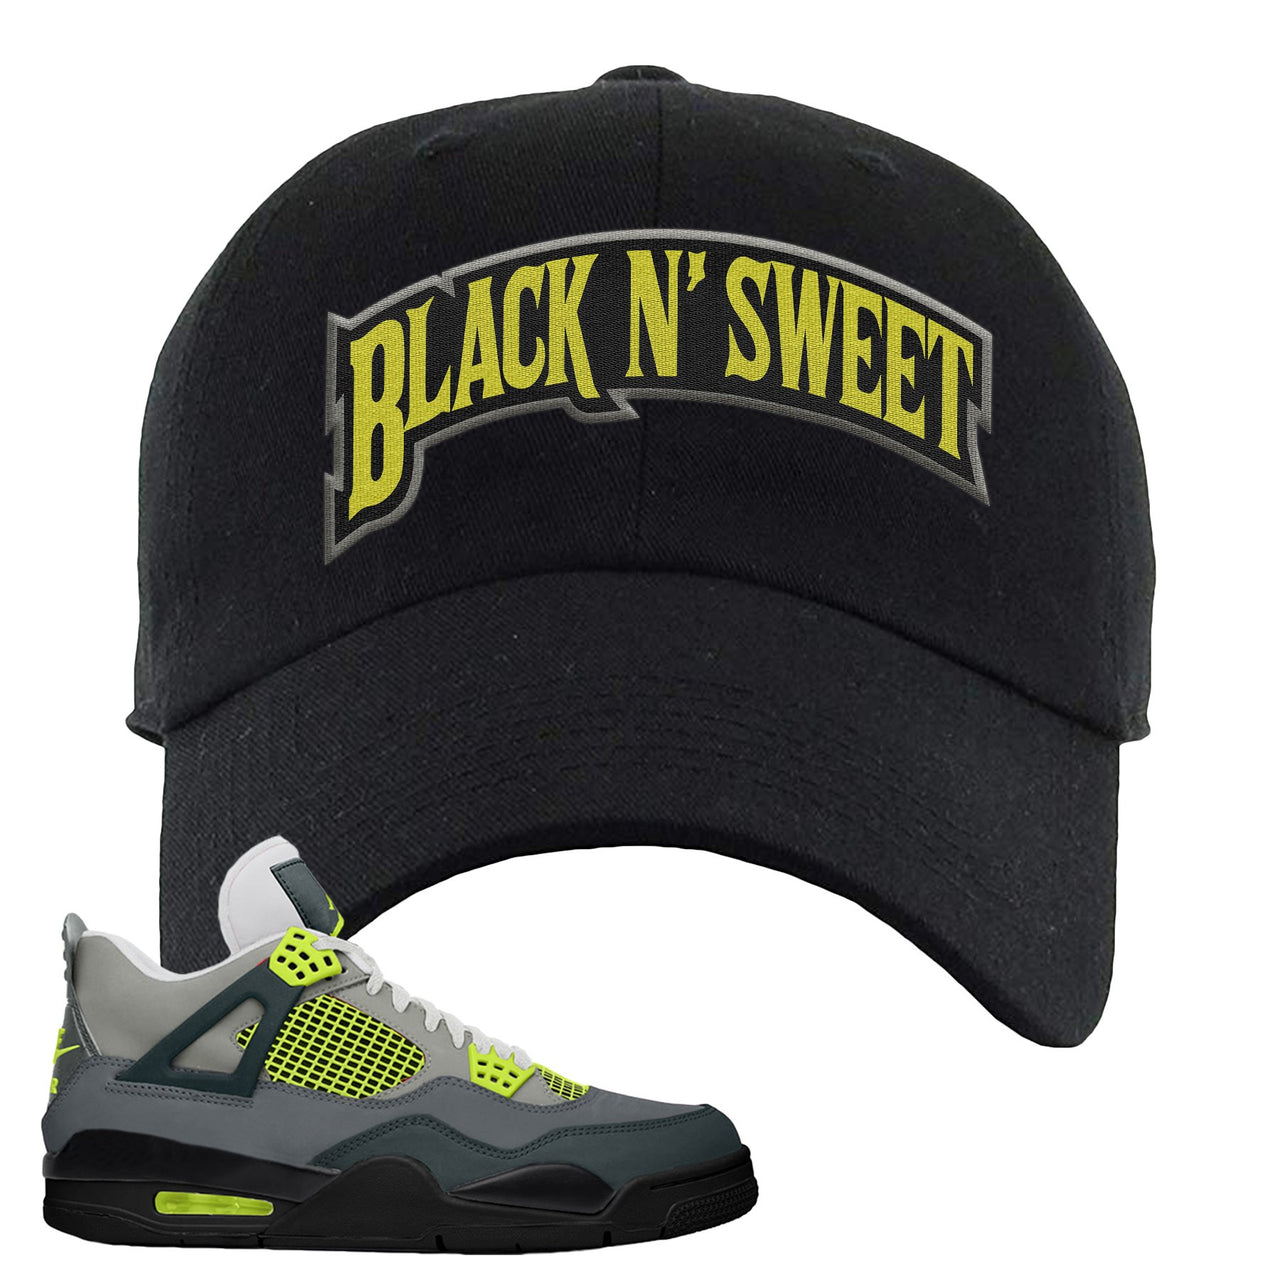 Jordan 4 Neon Sneaker Black Dad Hat | Hat to match Nike Air Jordan 4 Neon Shoes | Black N Sweet Arch